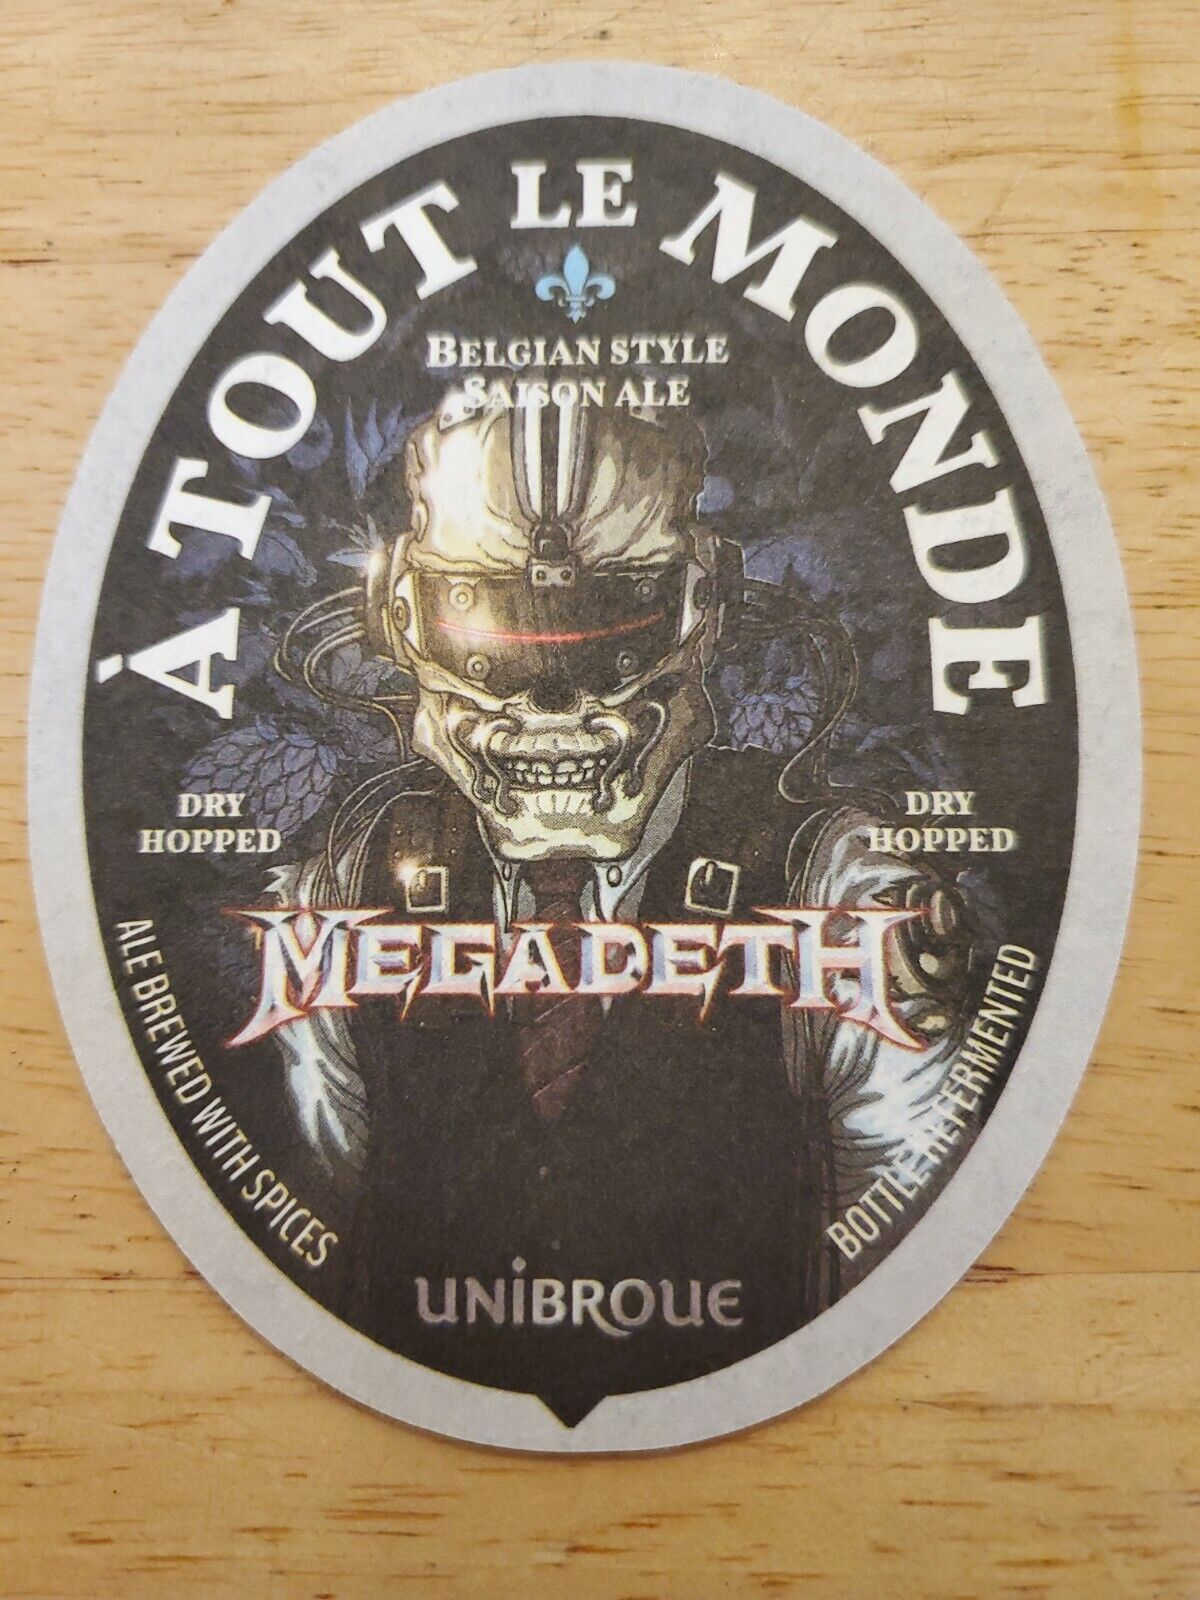 A TOUT LE MONDE BELGIAN ALE Beer COASTER MAT Unibroue Quebec CANADA Megadeth